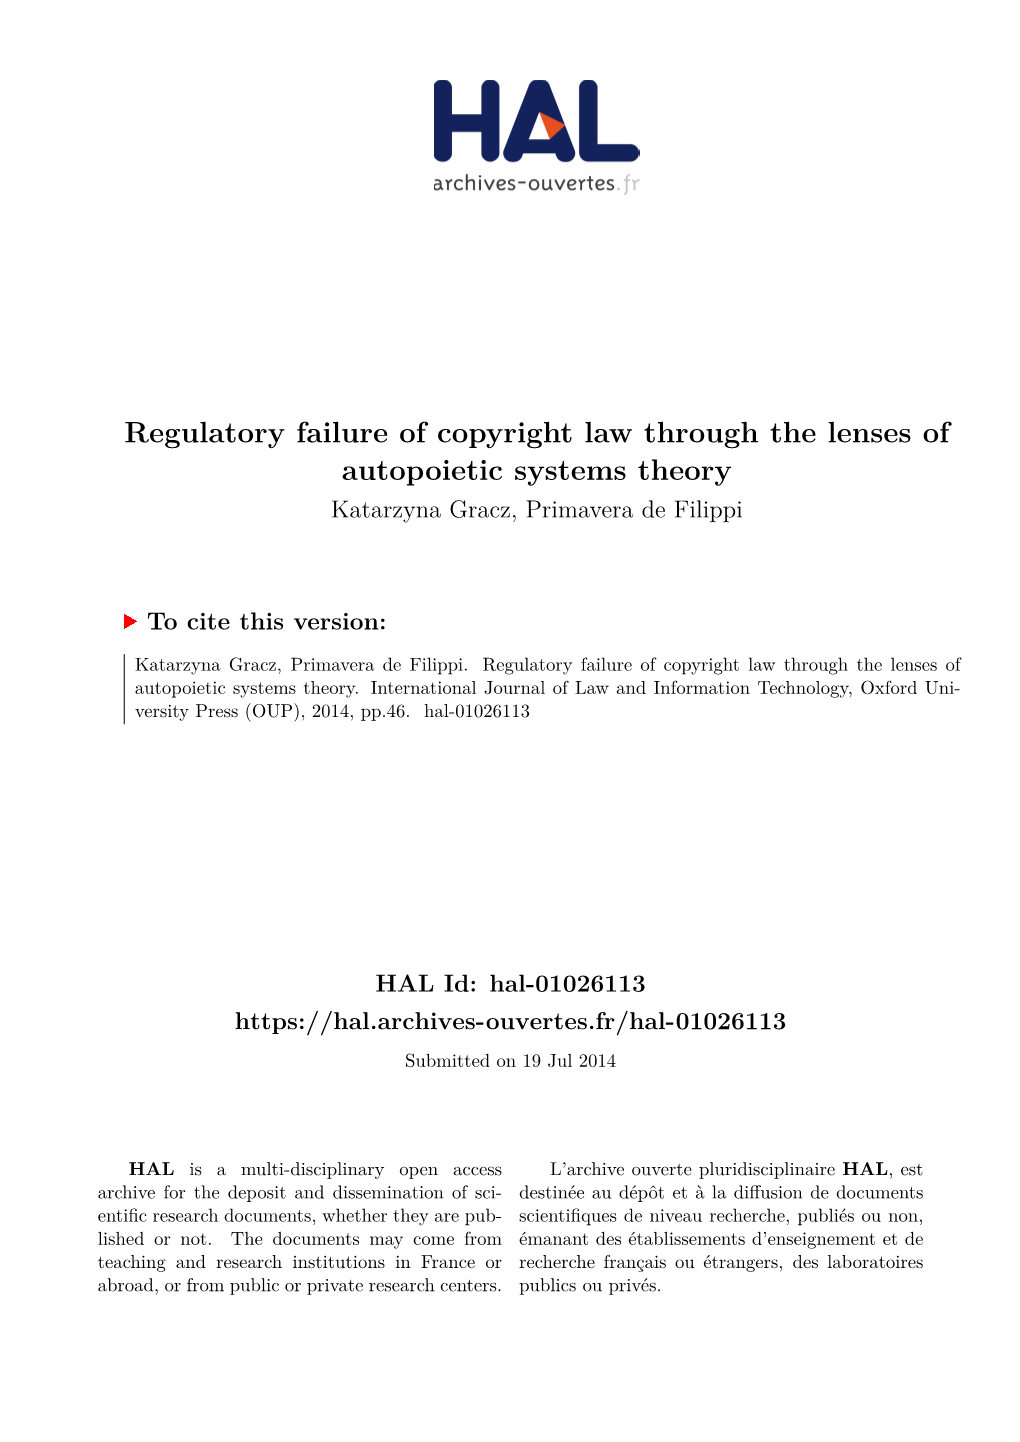 Regulatory Failure of Copyright Law Through the Lenses of Autopoietic Systems Theory Katarzyna Gracz, Primavera De Filippi